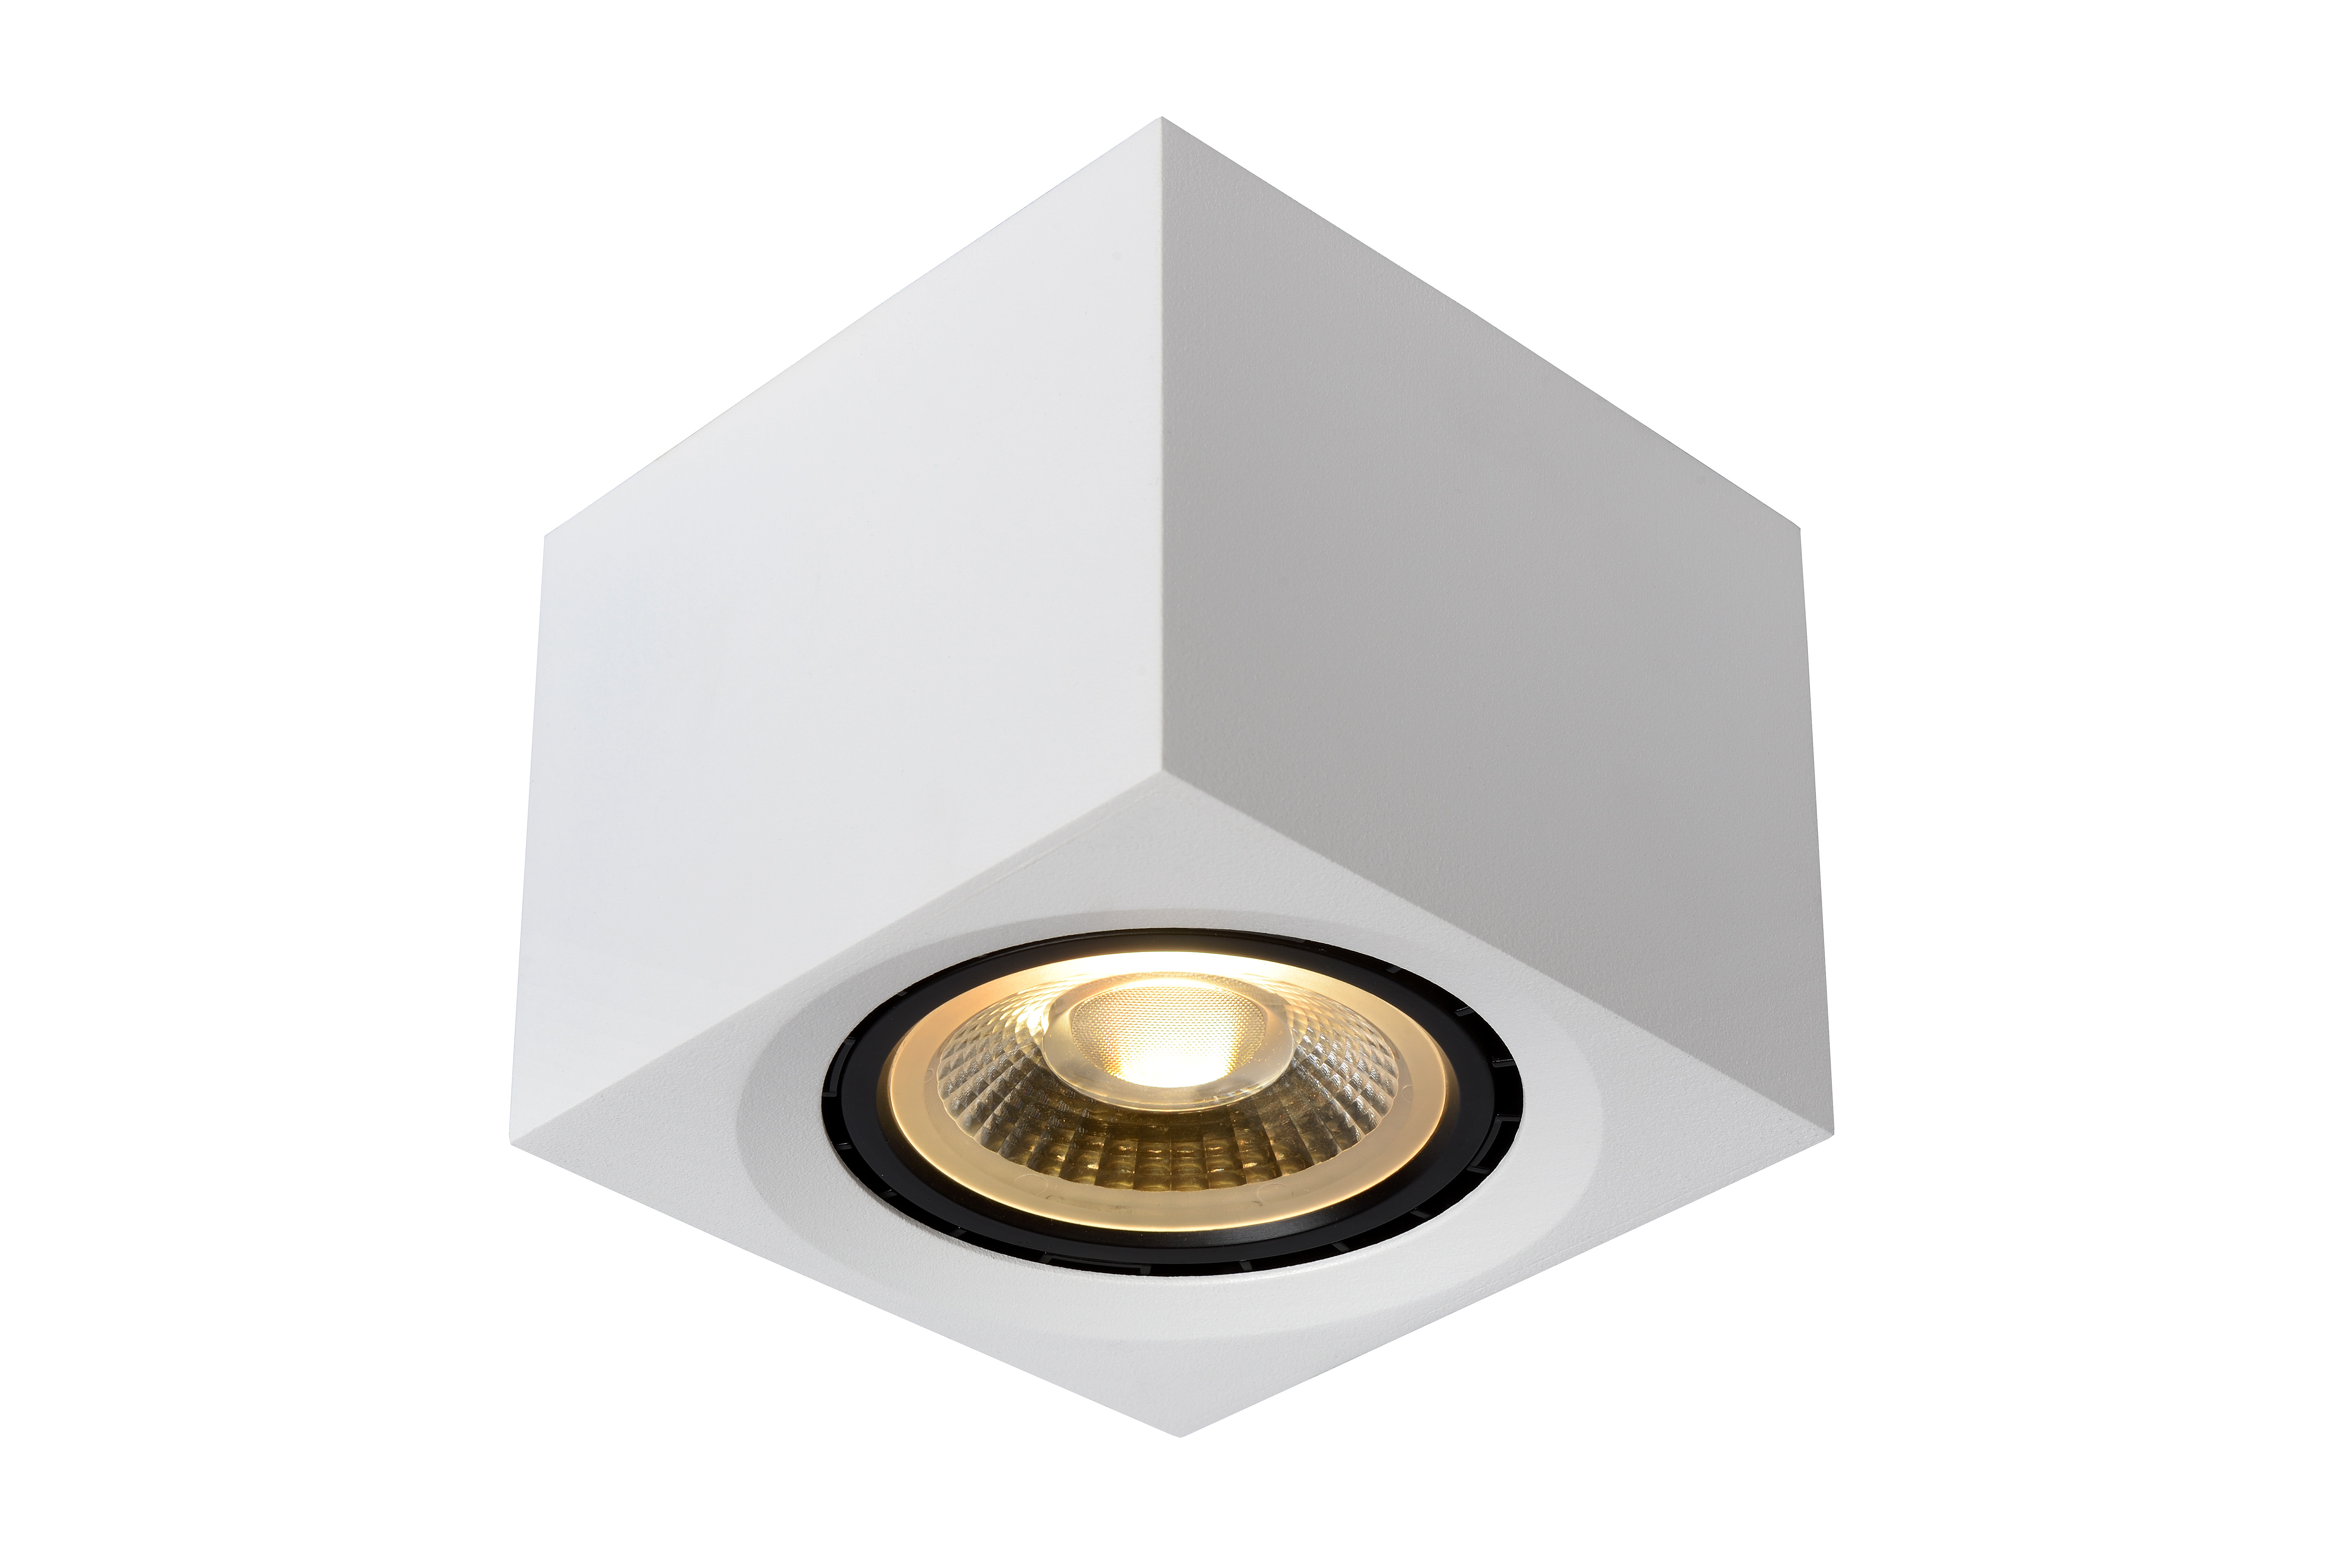 FineBuy LED Deckenlampe A Dimmbar Lampe Warmweiß Drehbar Deckenstrahler GUT 